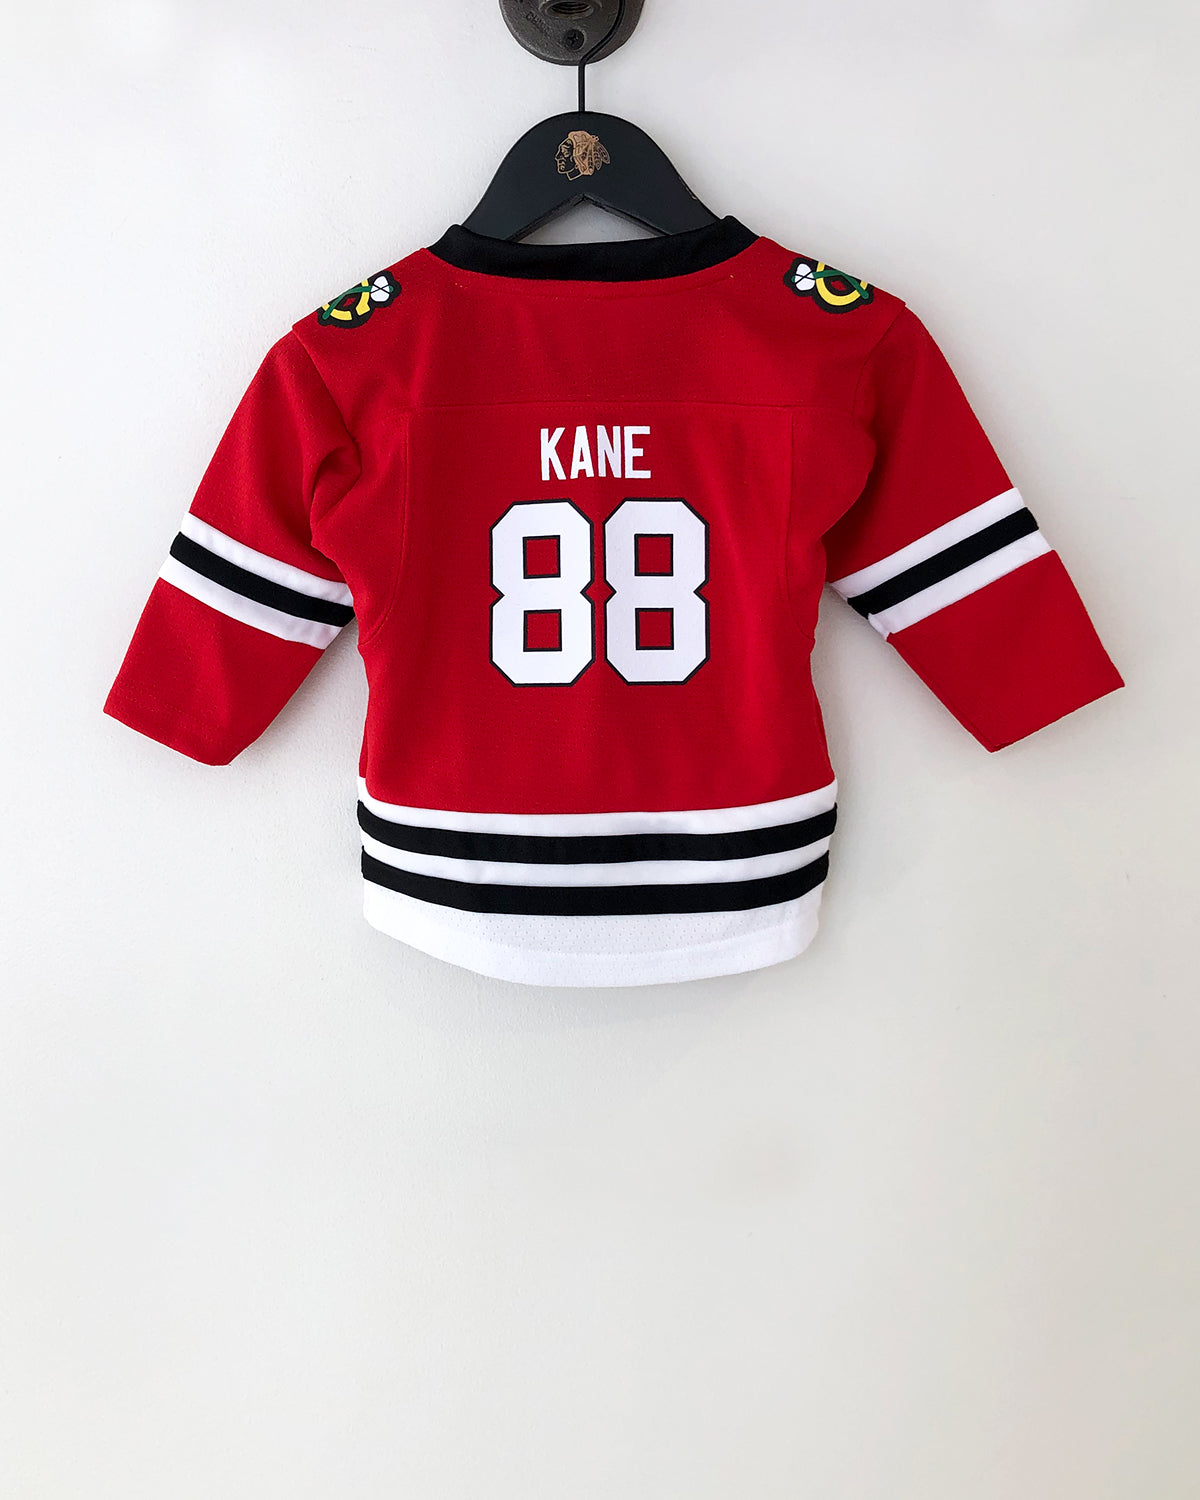 Patrick Kane Baby Clothes, New York Hockey Kids Baby Onesie